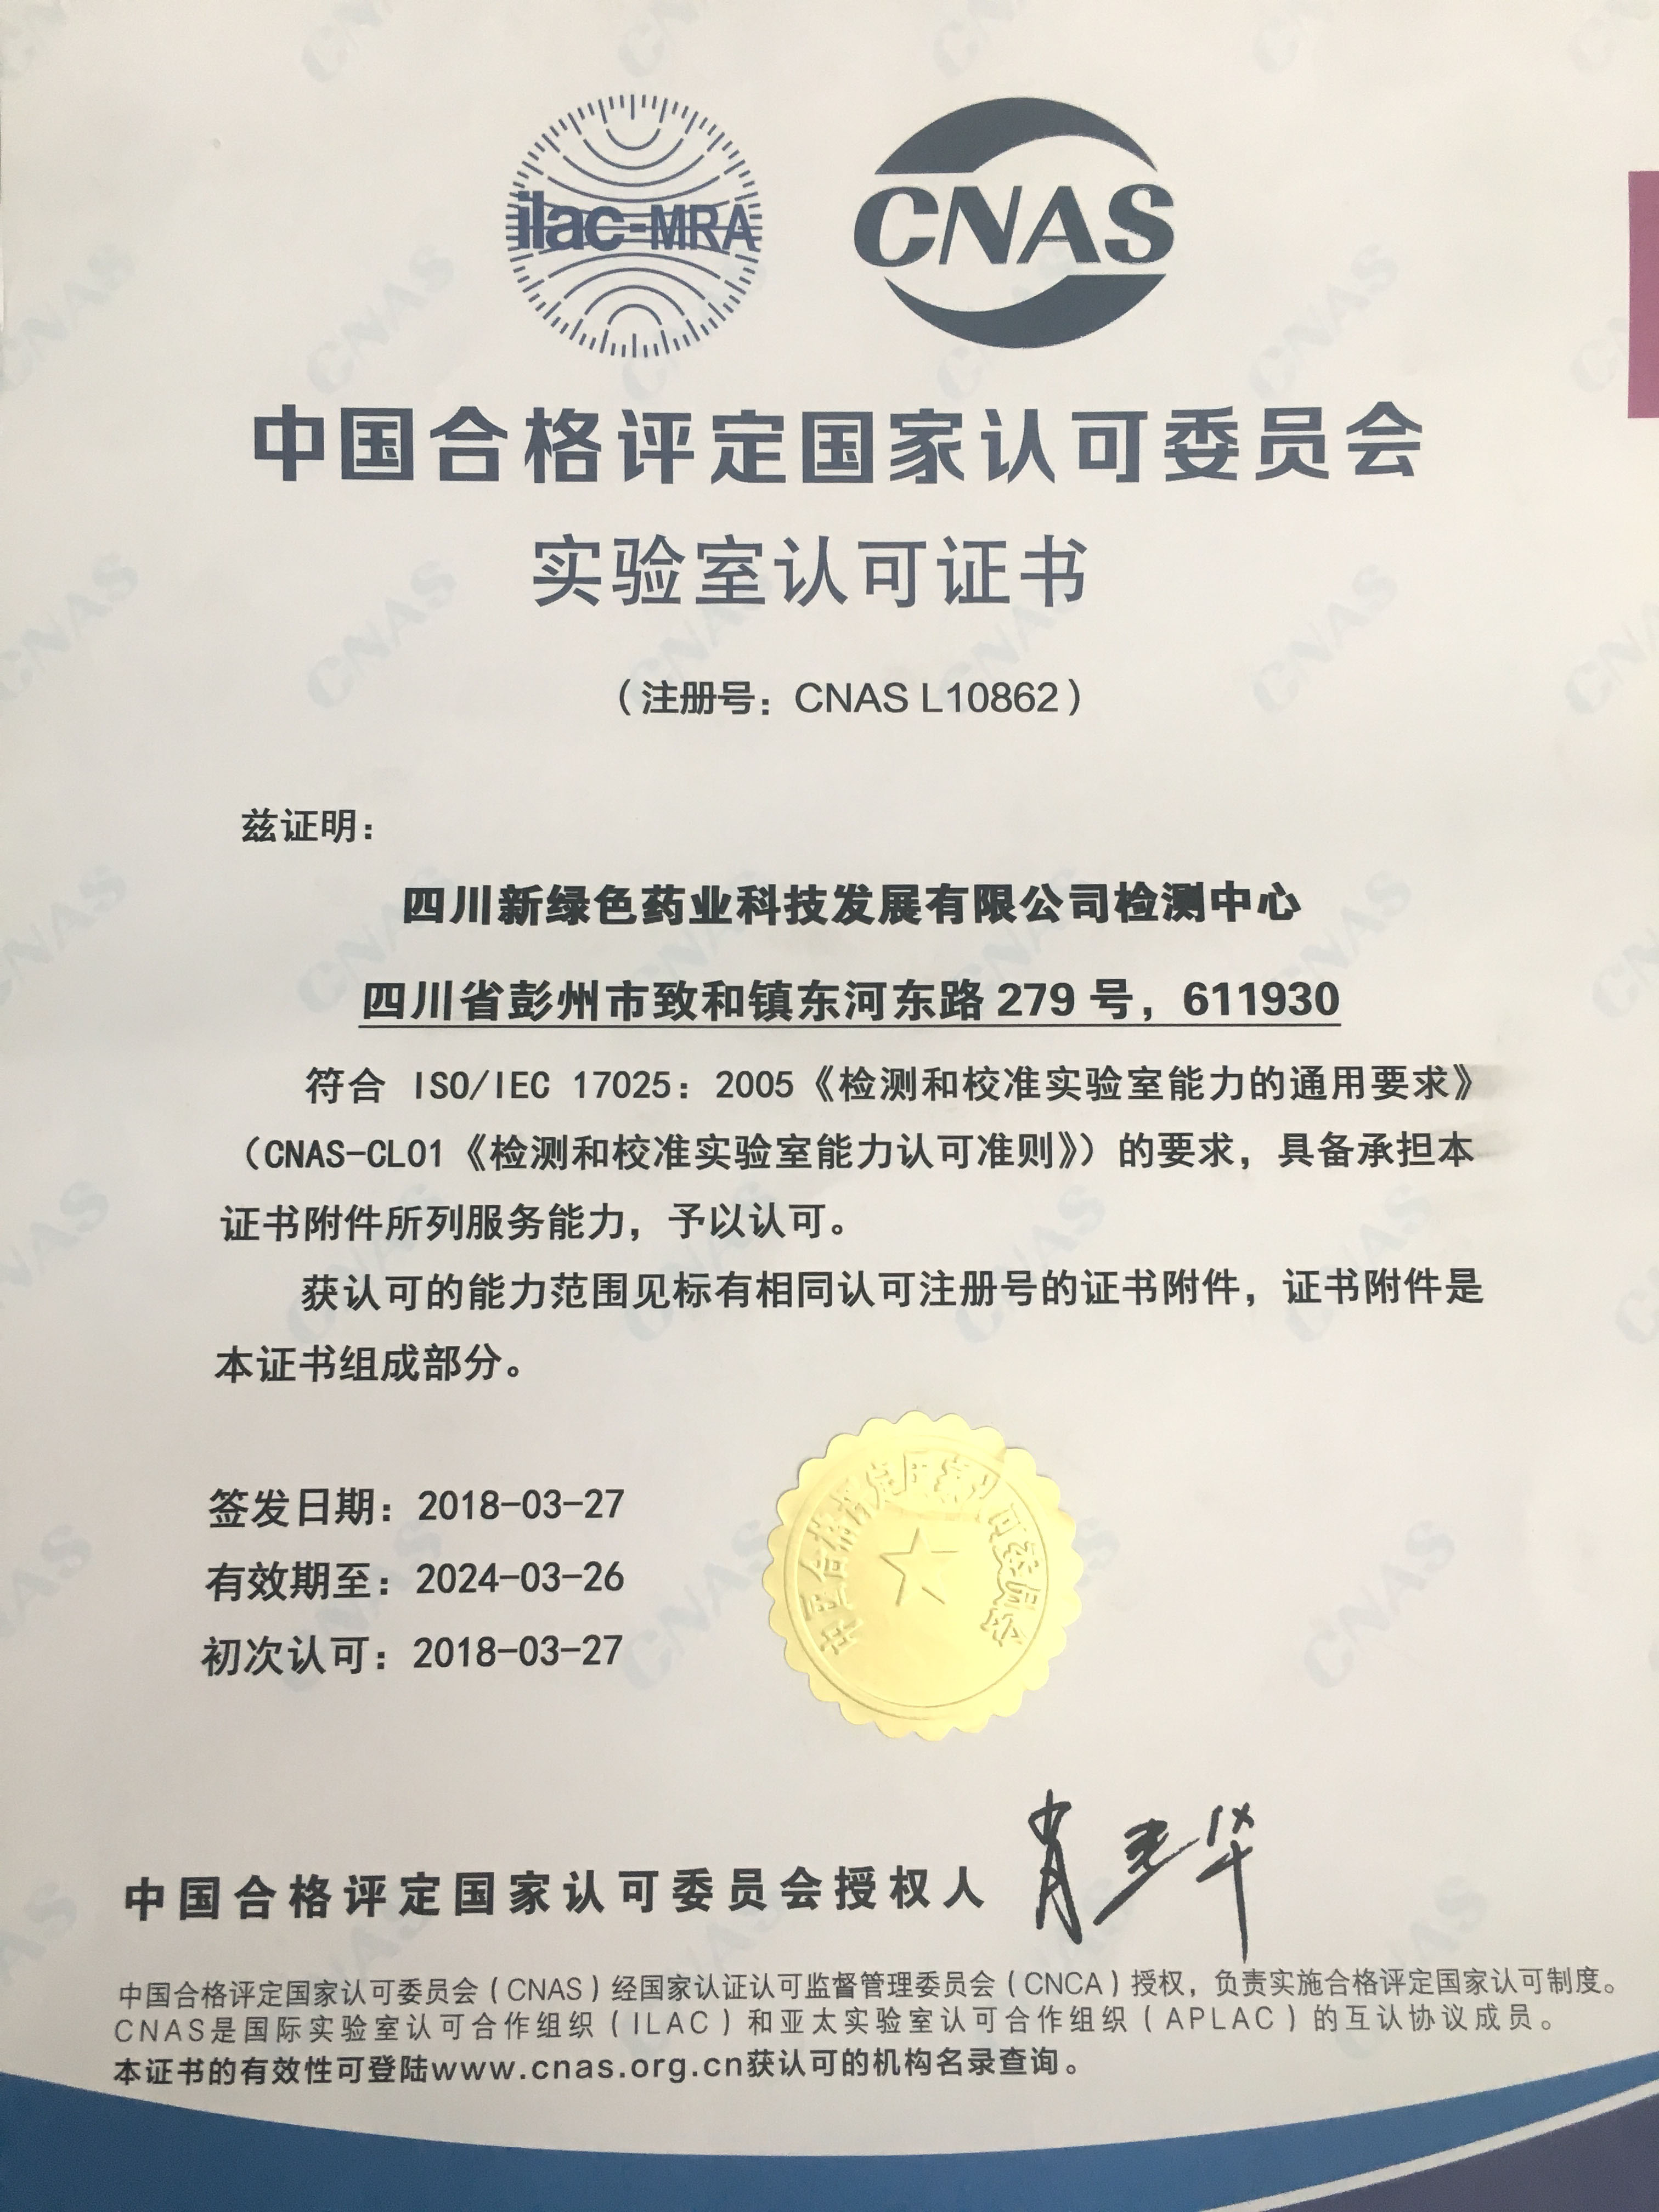 CNAs laboratory accreditation certificate (Chinese)